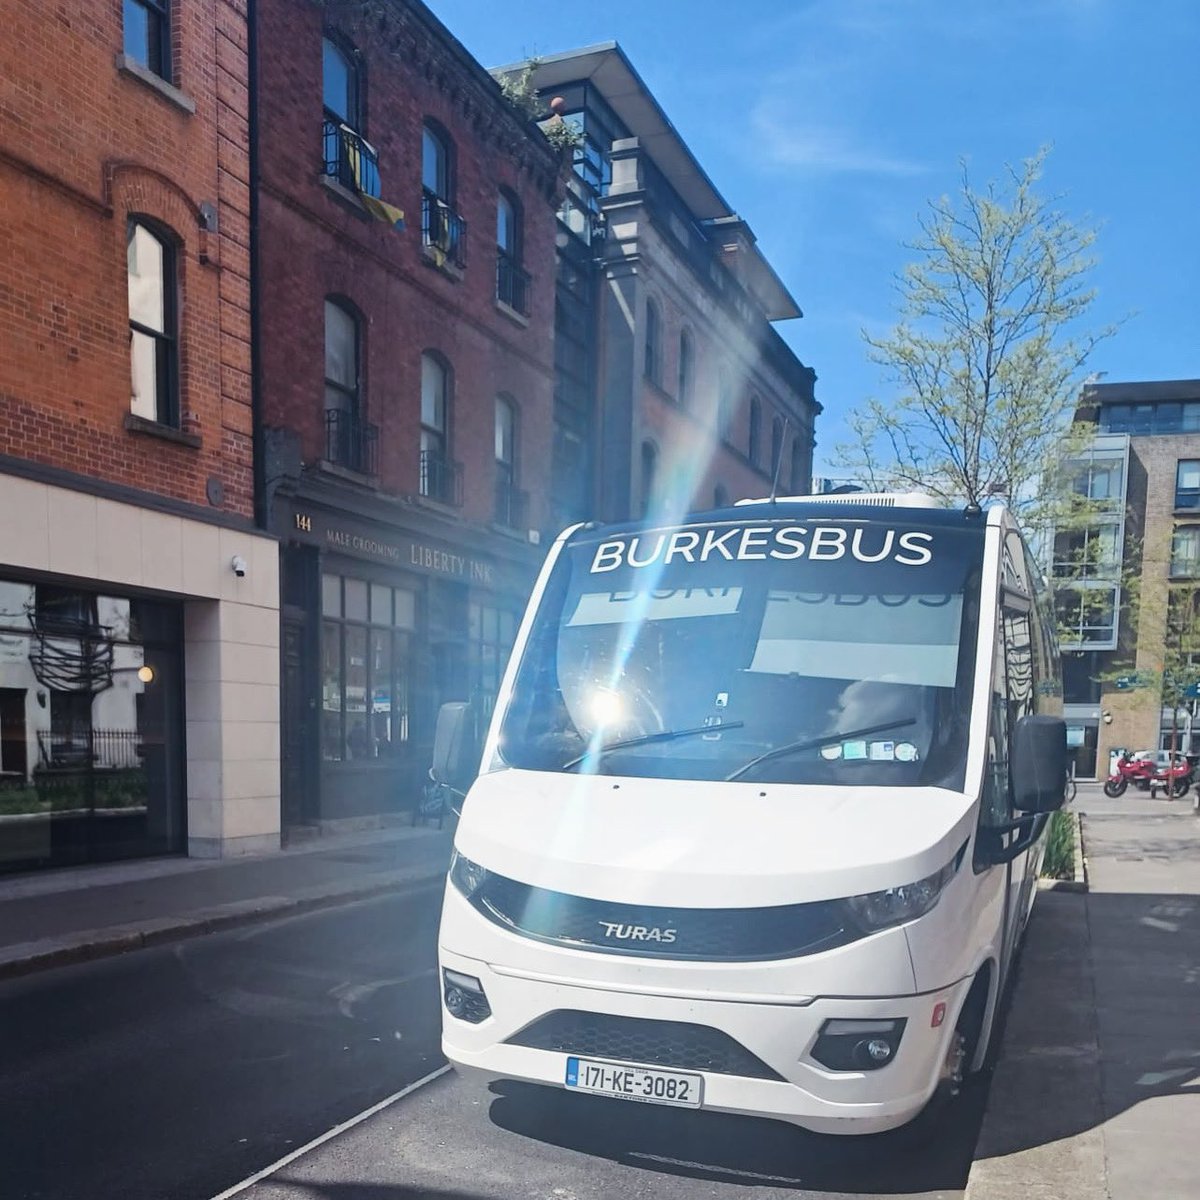 📍Francis Street, Dublin 8 #theliberties Website: burkesbus.ie . . . #dublin #daytrip #buslife #transport